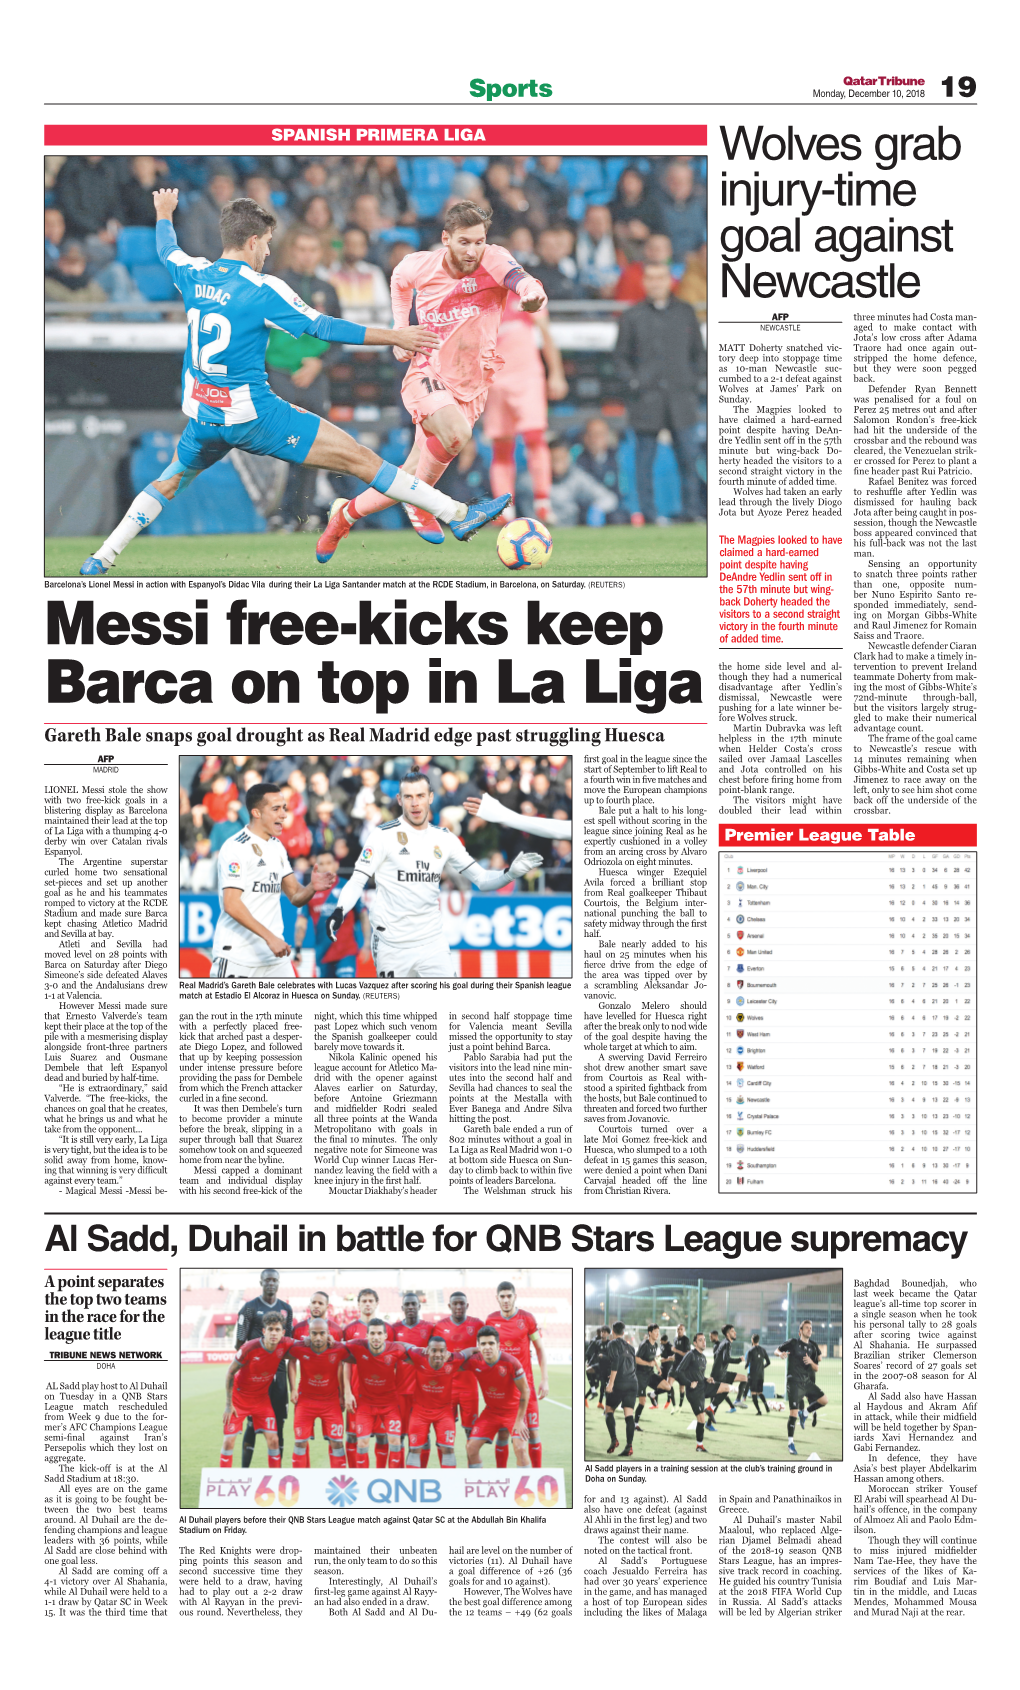 Messi Free-Kicks Keep Barca on Top in La Liga